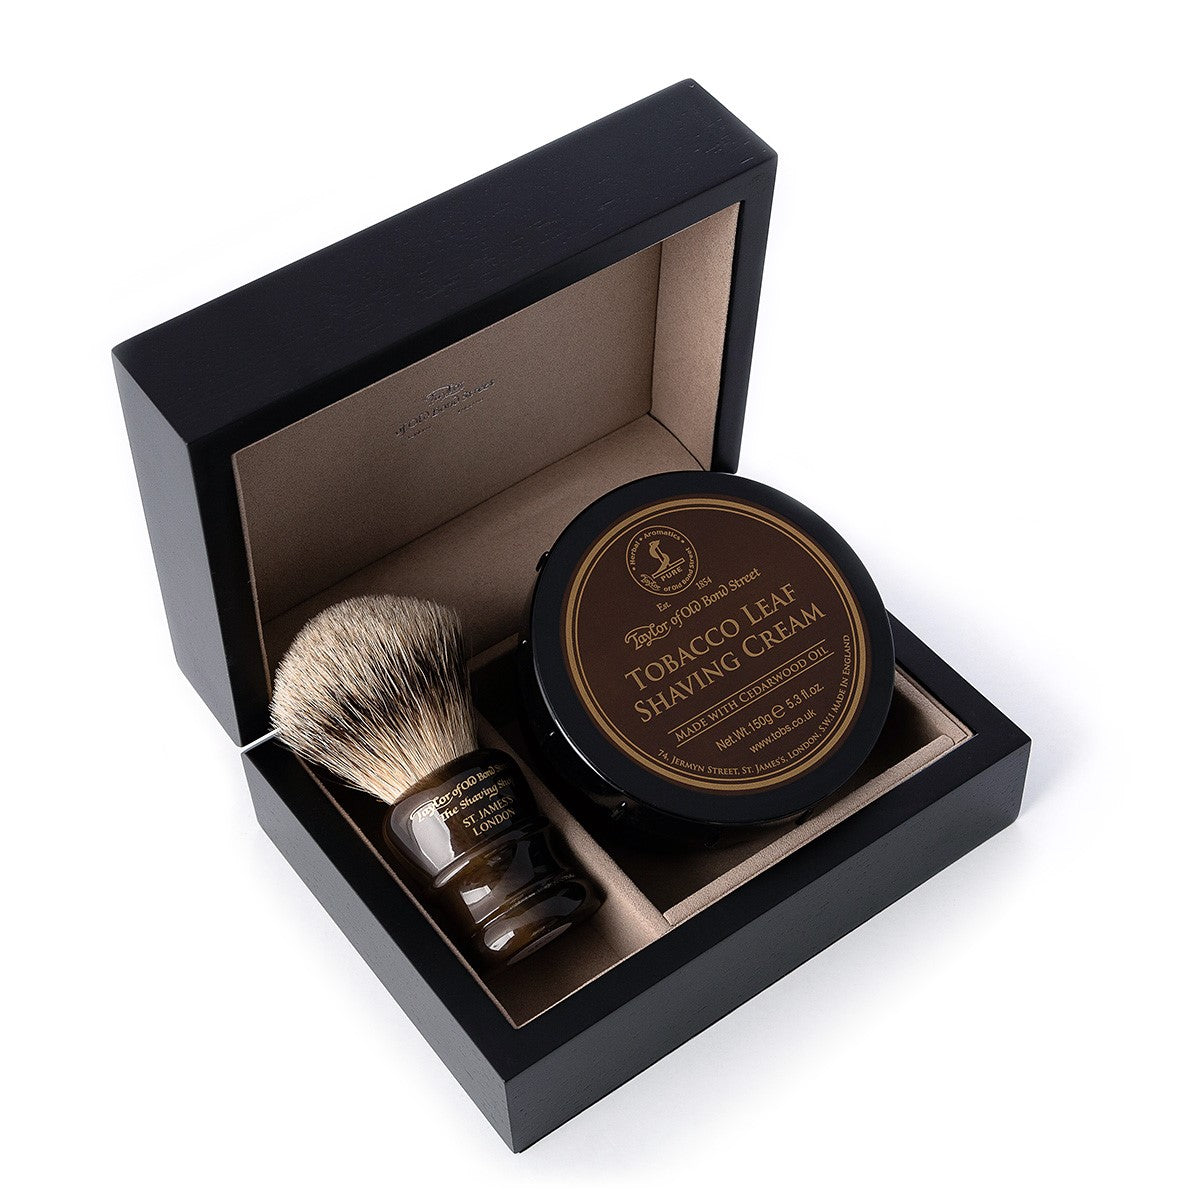 Tobacco Leaf Shaving Cream & Super Shaving Brush in Wooden Gift Box